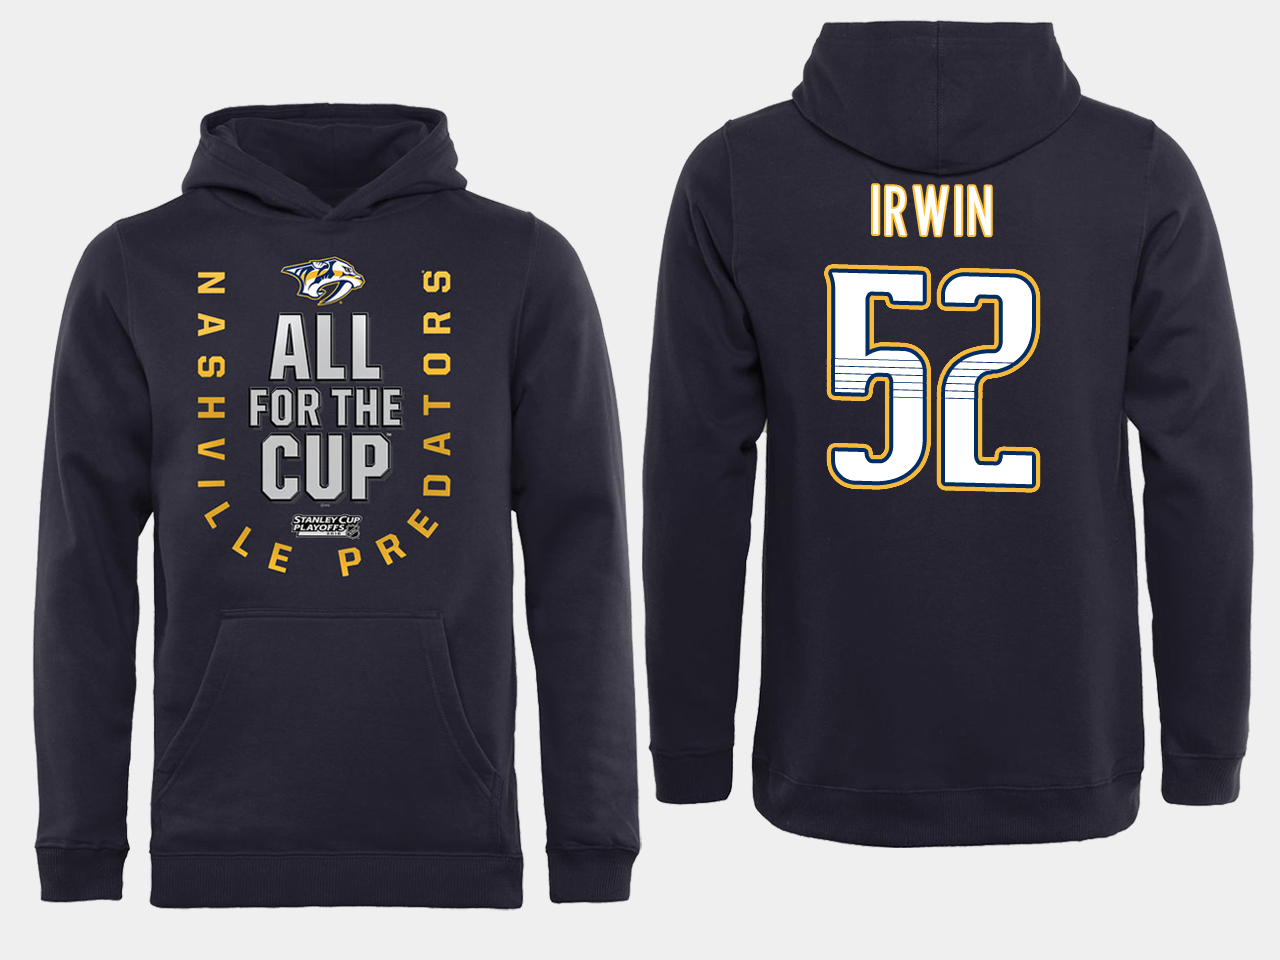 Men NHL Adidas Nashville Predators #52 Irwin black ALL for the Cup hoodie